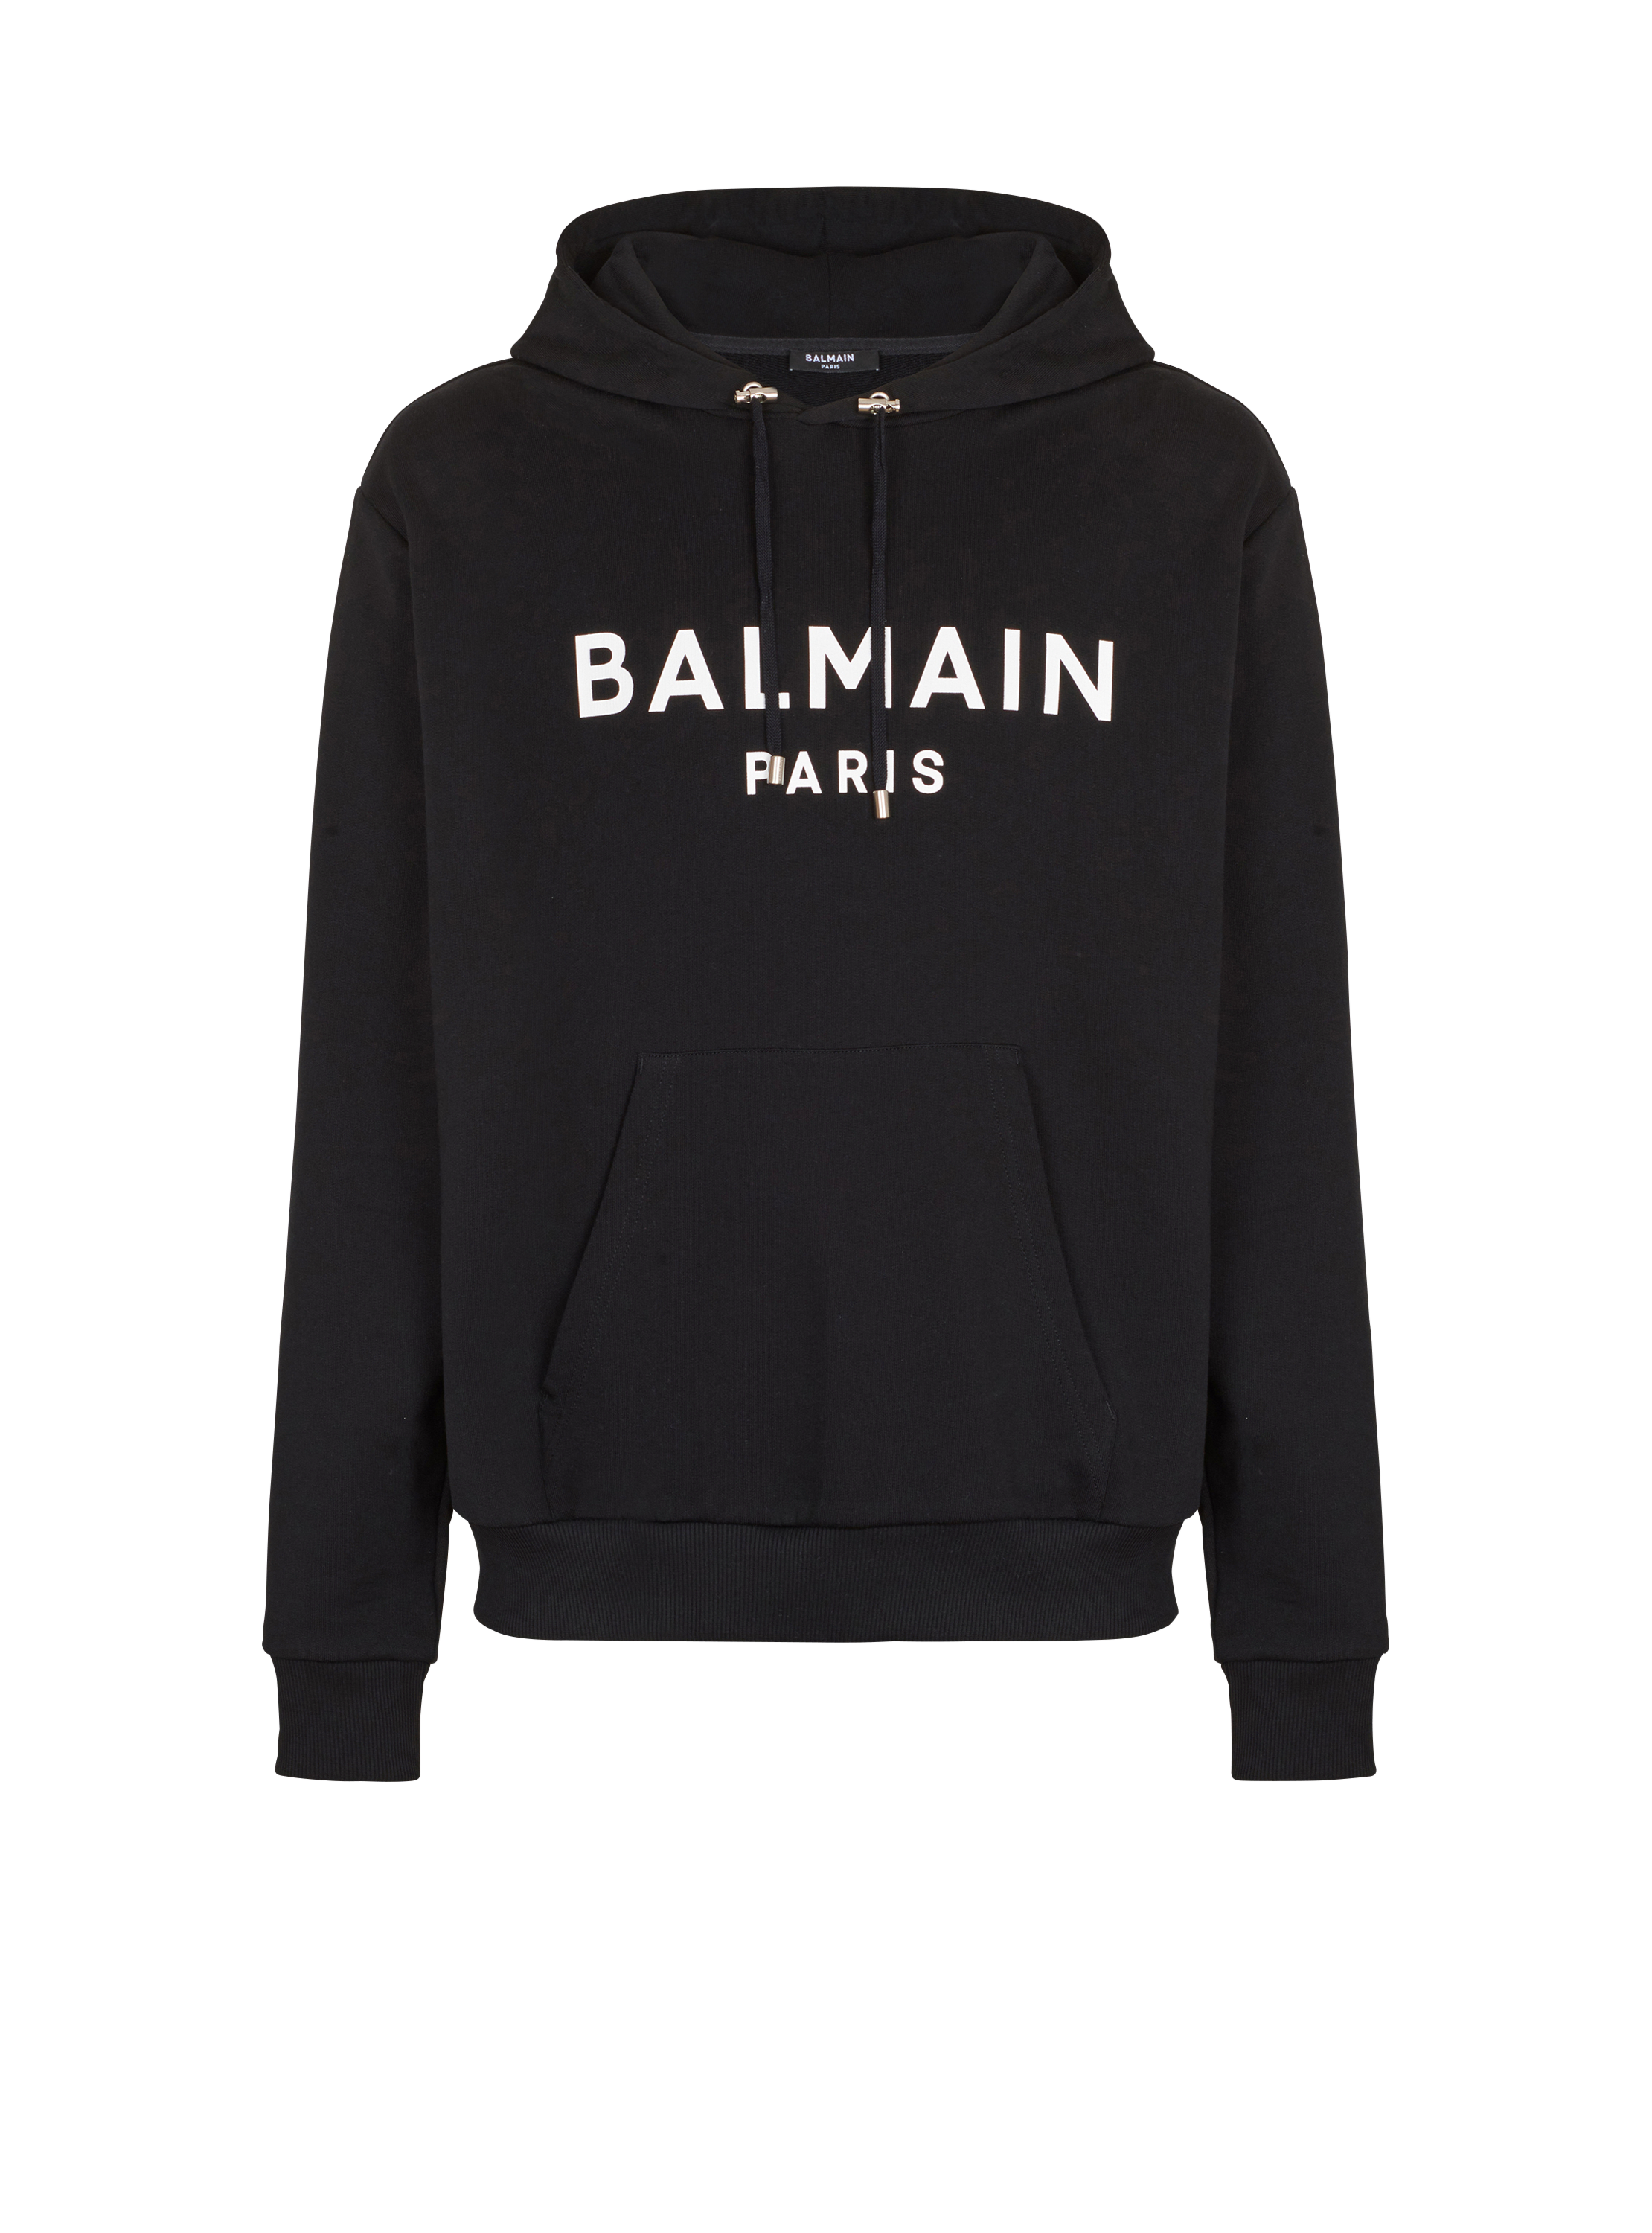 Cotton printed Balmain logo hoodie, black, hi-res